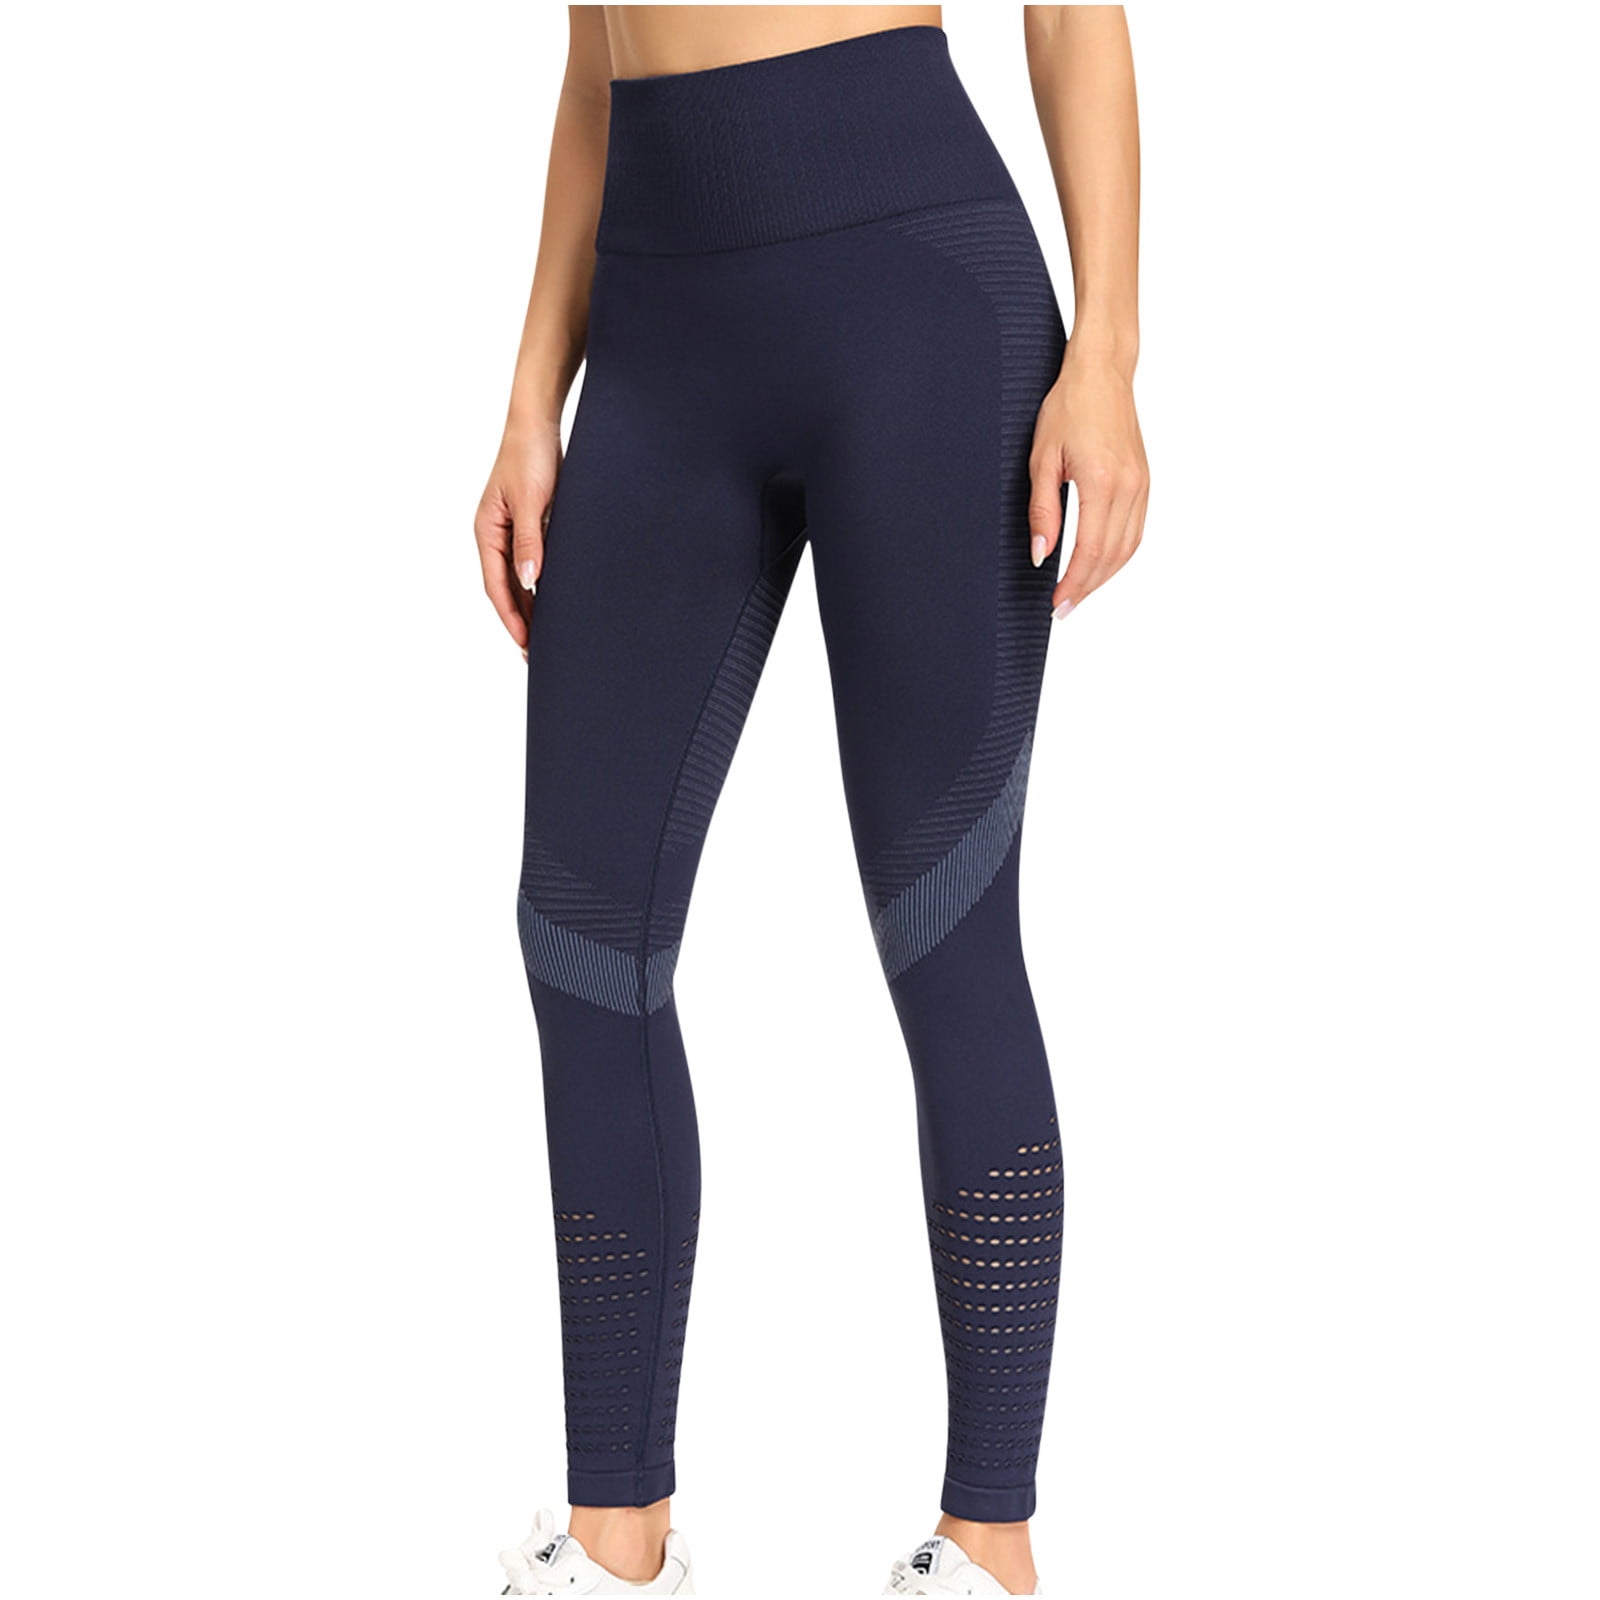 Women tight fast drying sports fitness pants yoga pants- Material: Nylon  78% + spandex 22% (High elasti